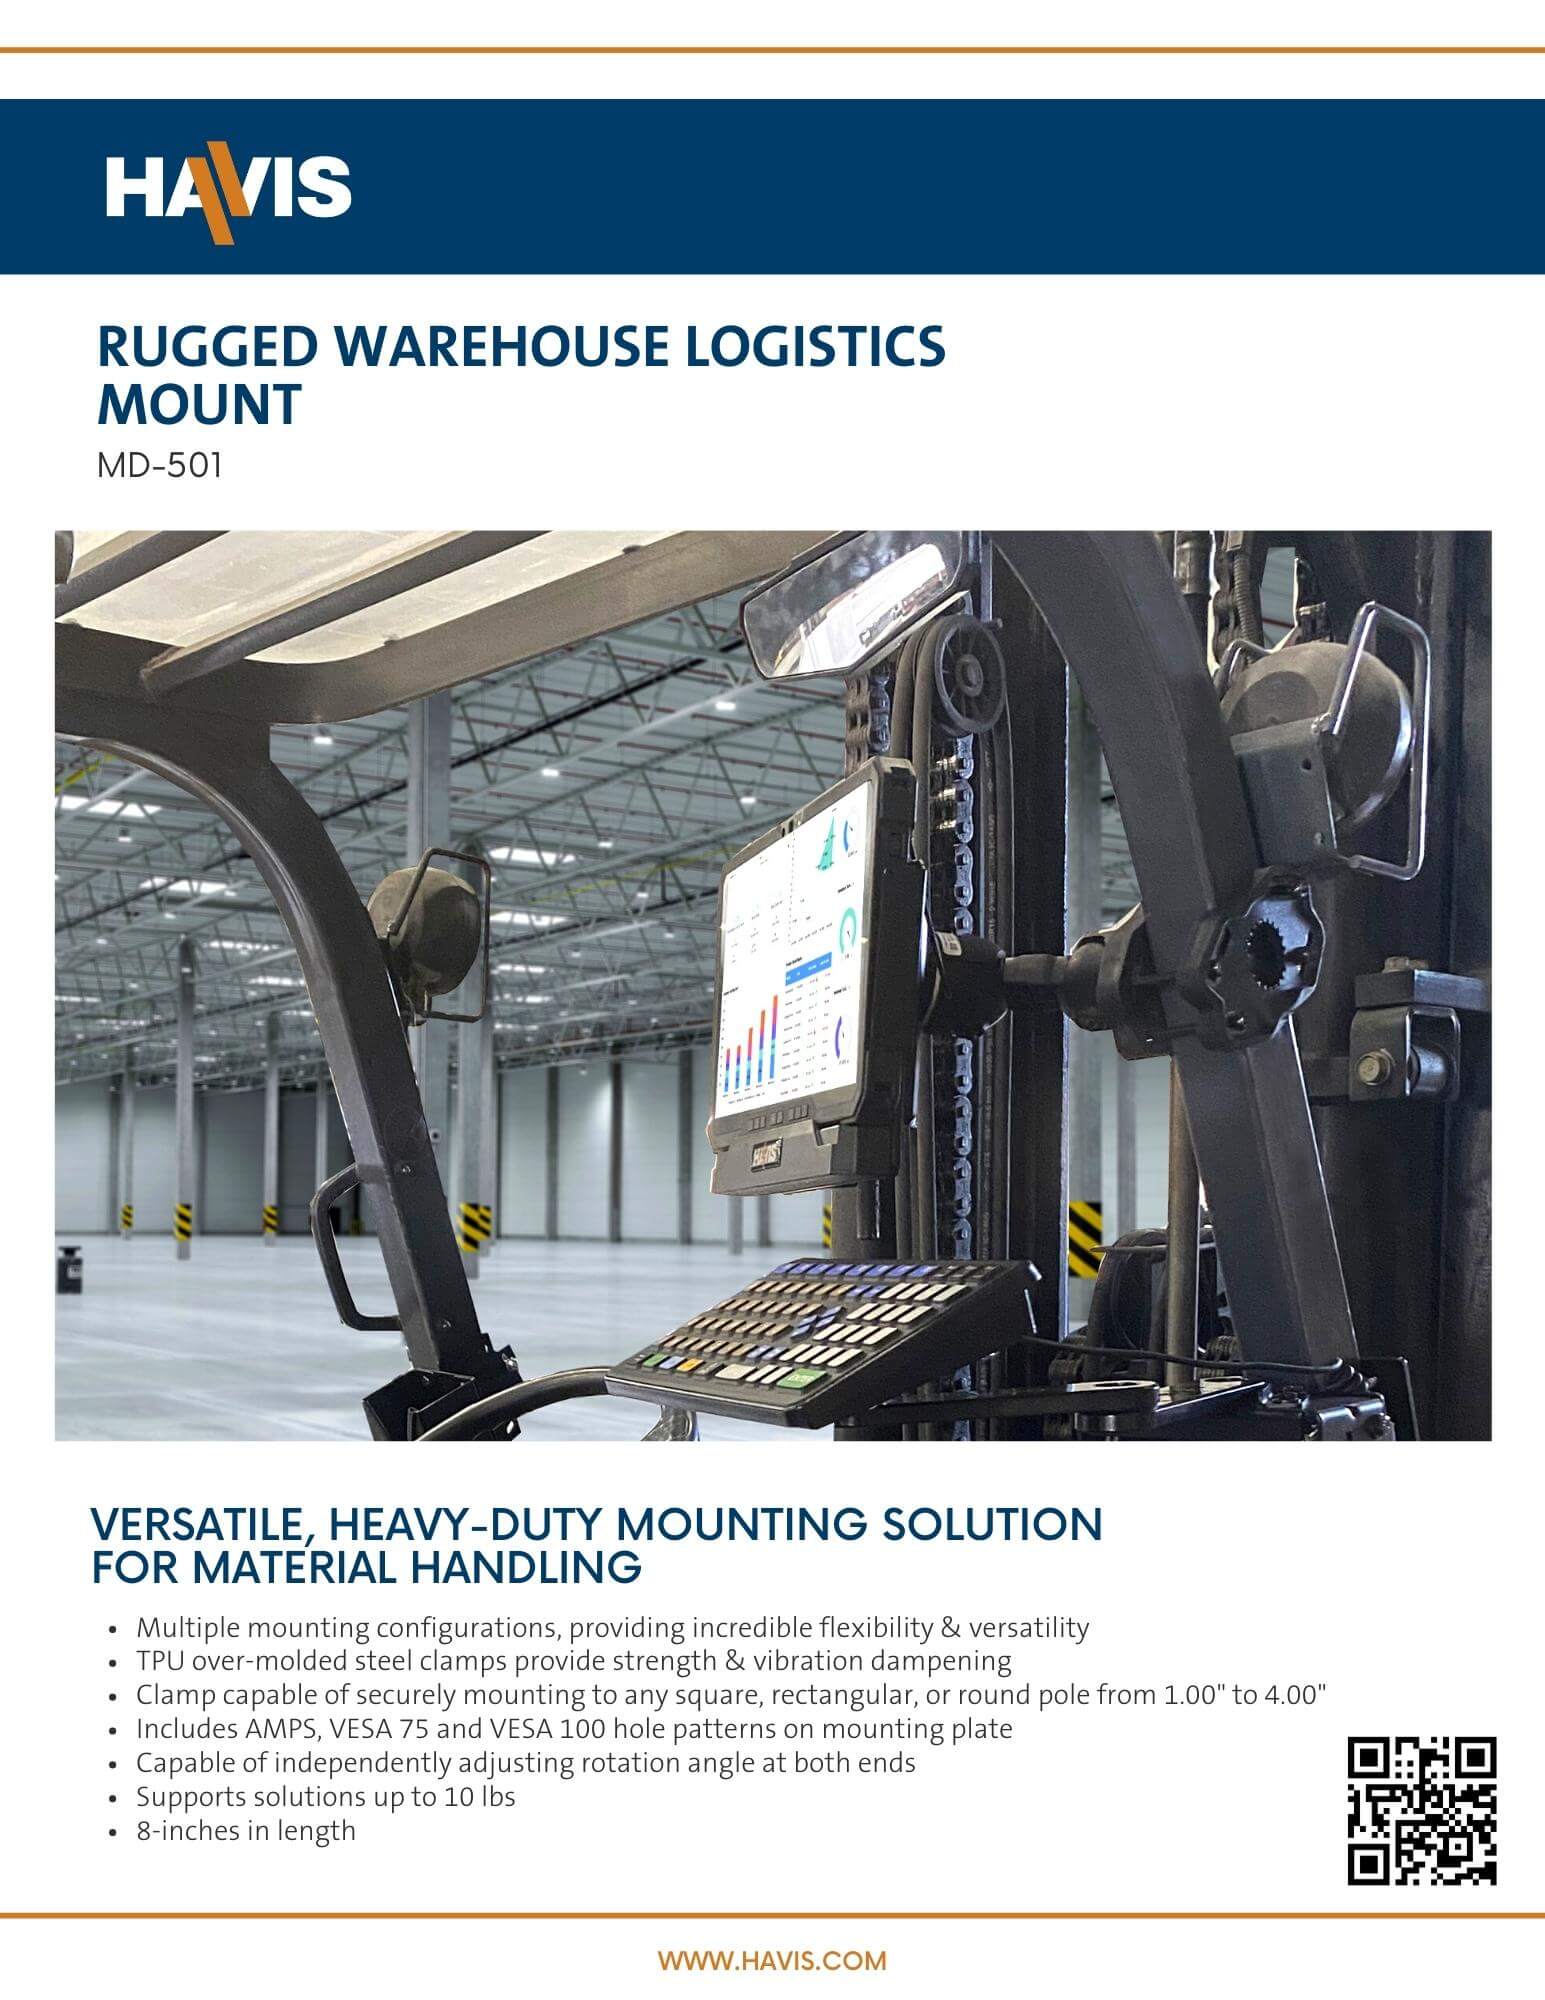 Rugged Warehouse Logistics Mount Sales Sheet